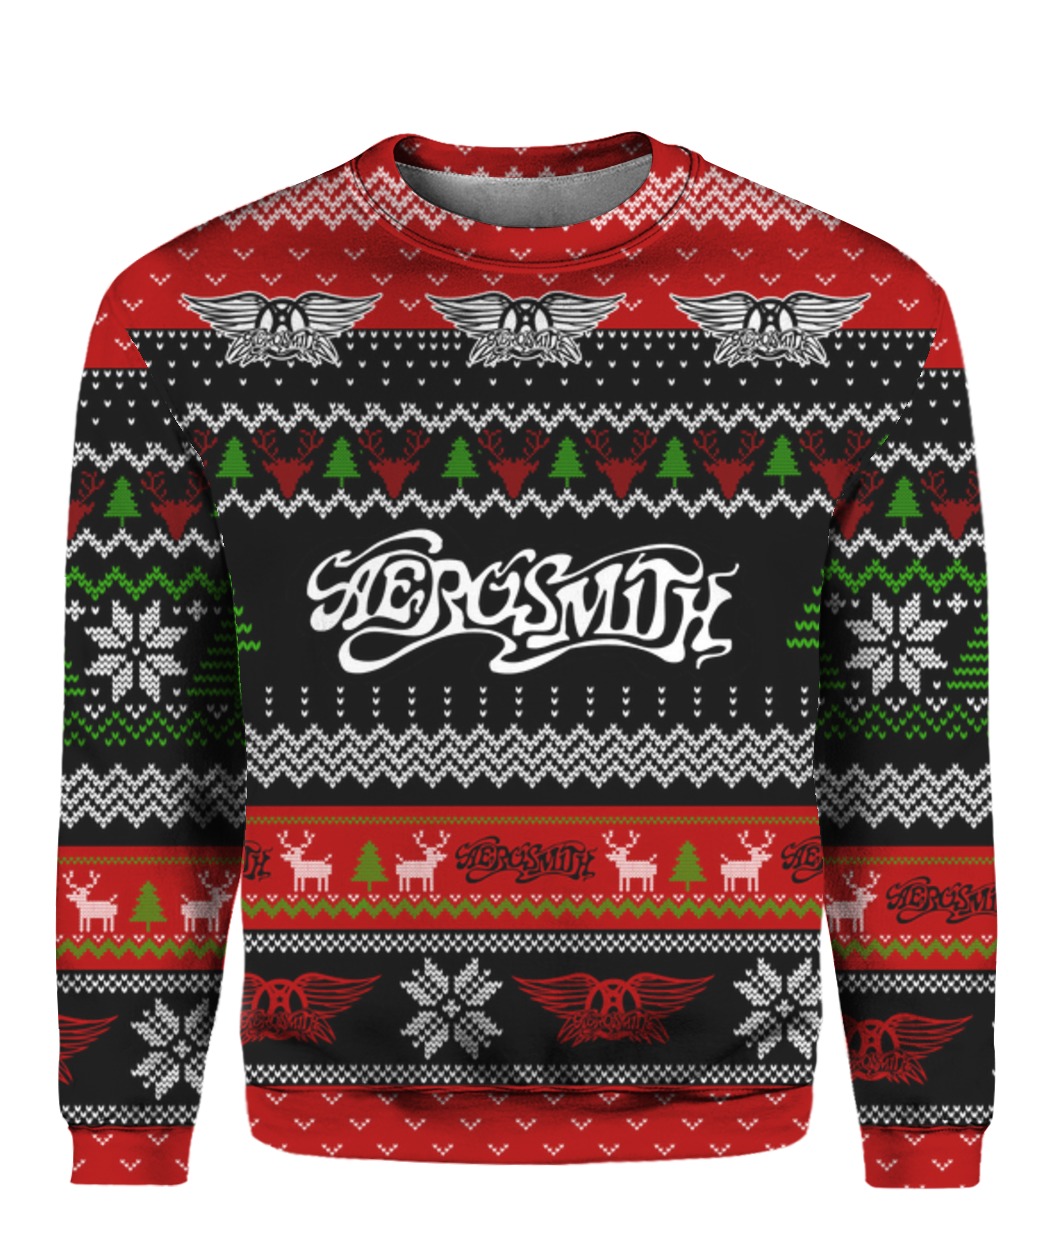 Aerosmith full printing ugly christmas sweater 1